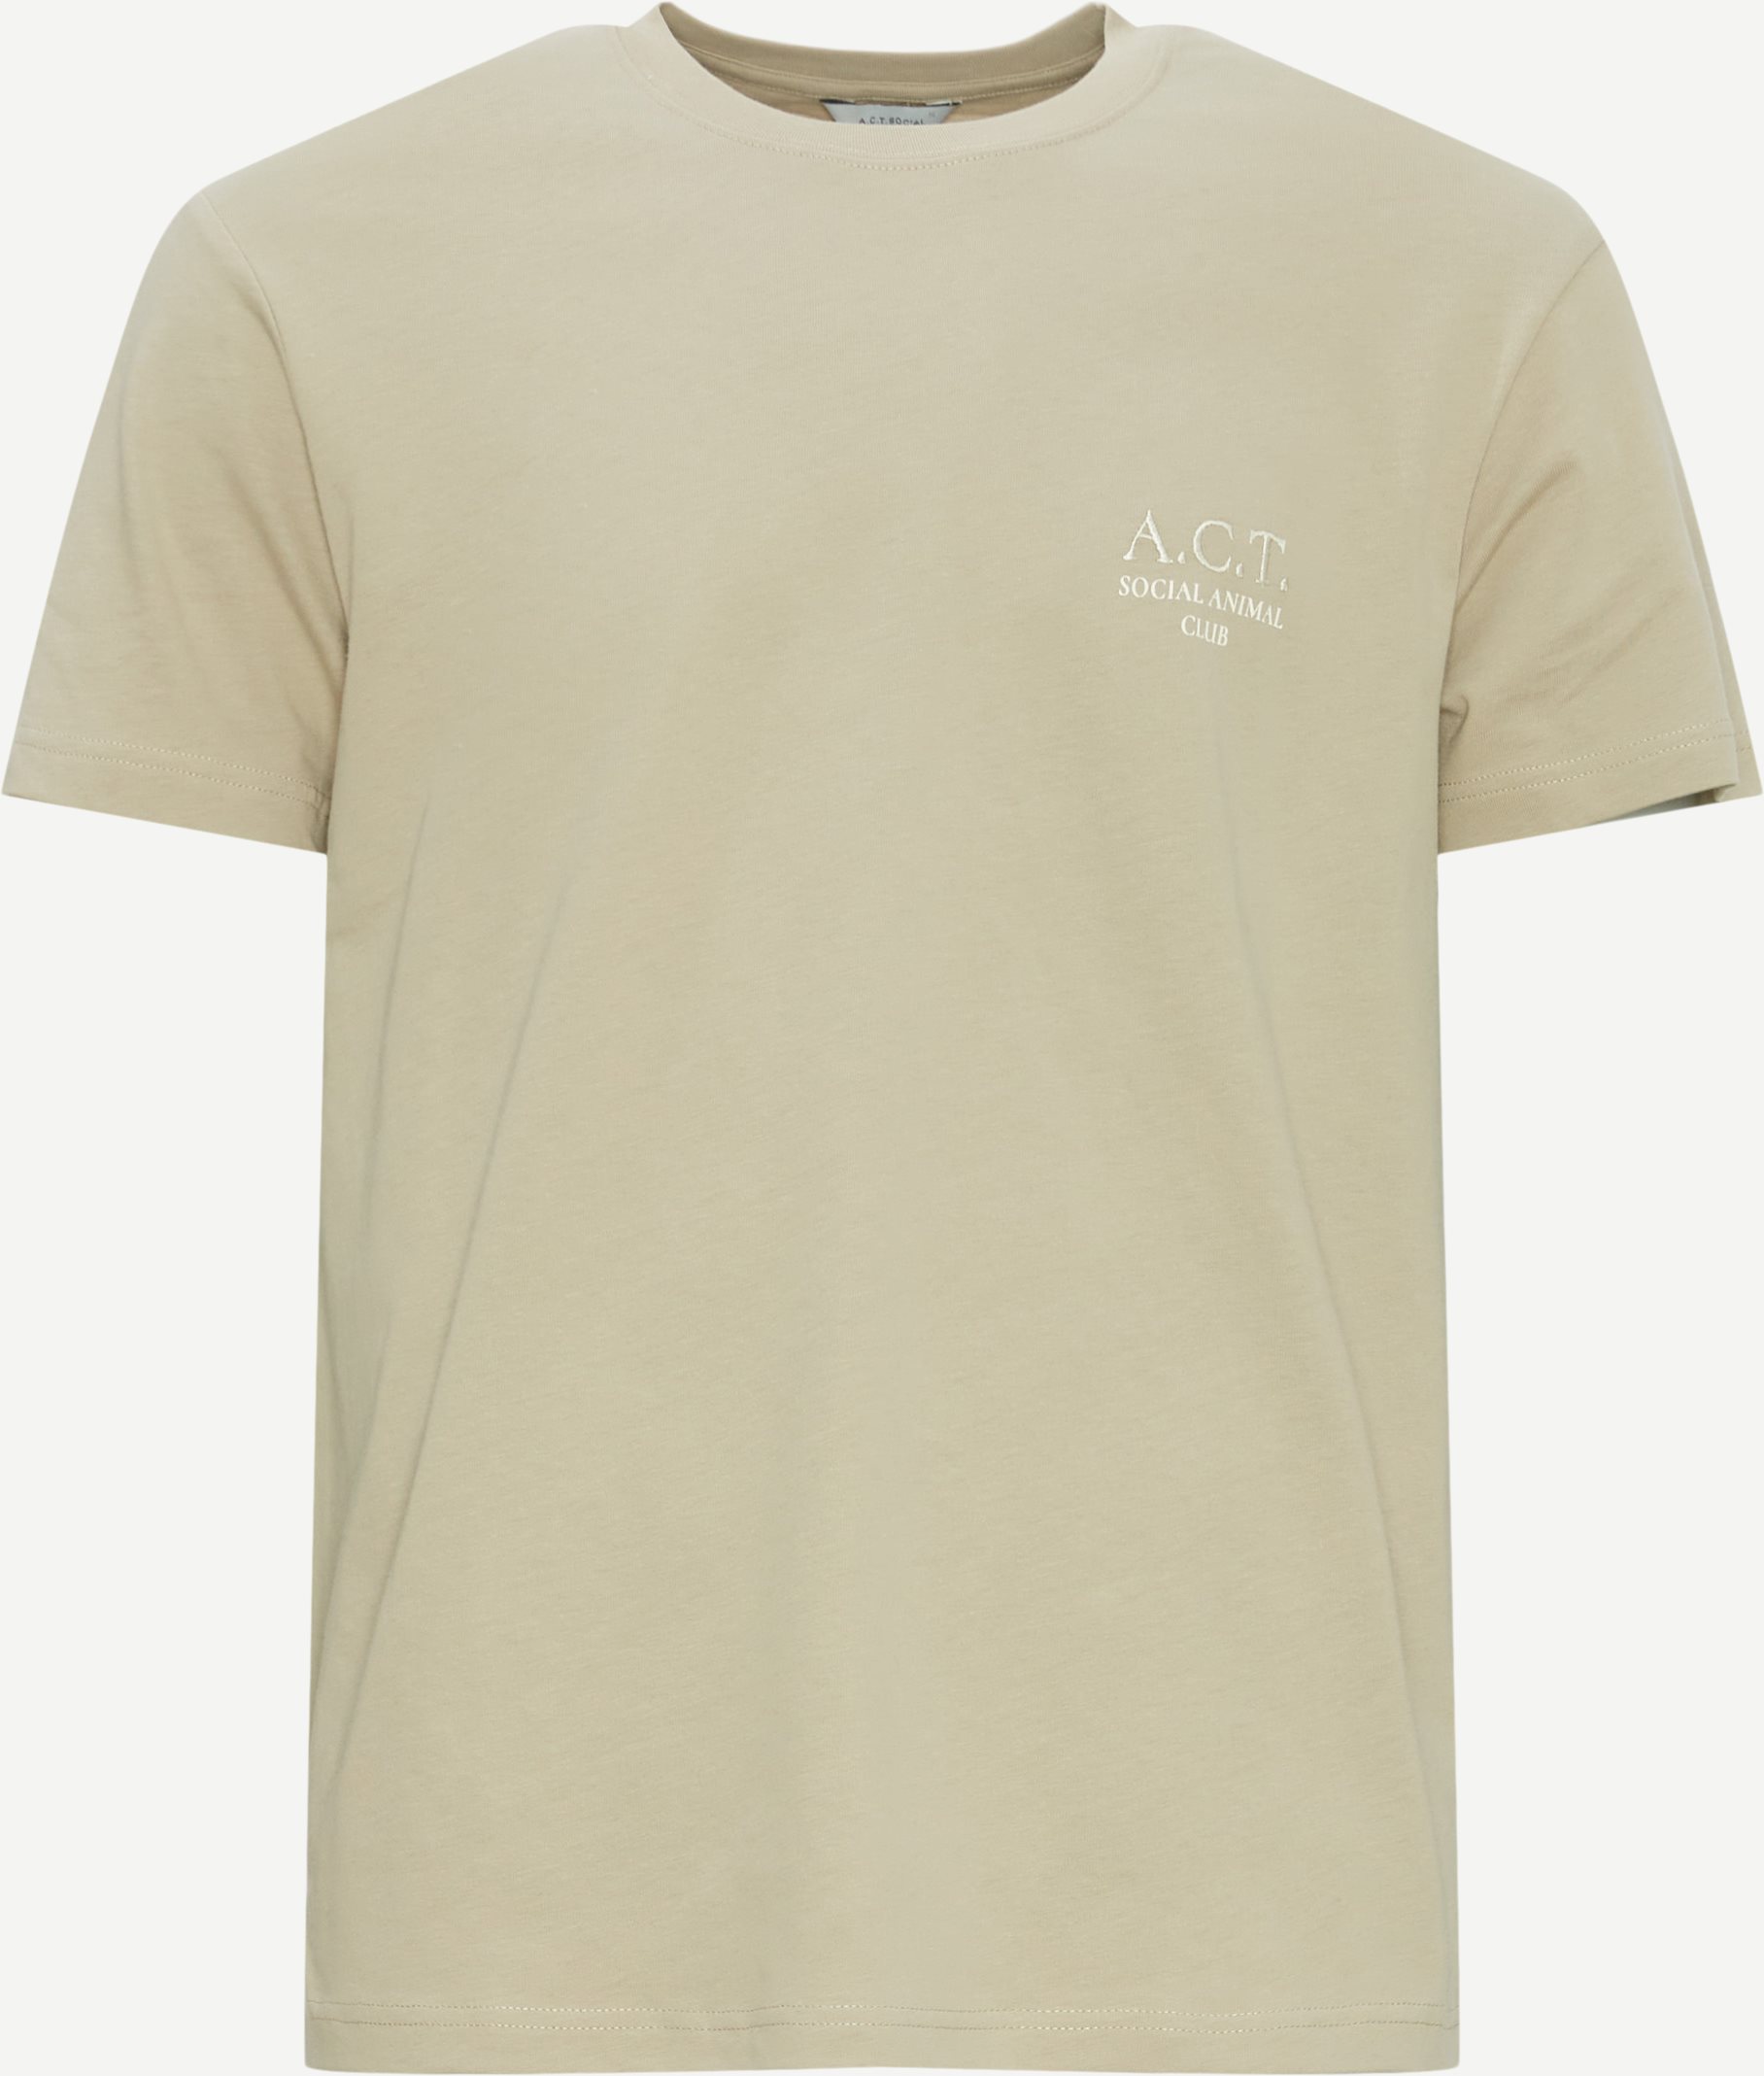 A.C.T. SOCIAL T-shirts ARON AS1017 Grey